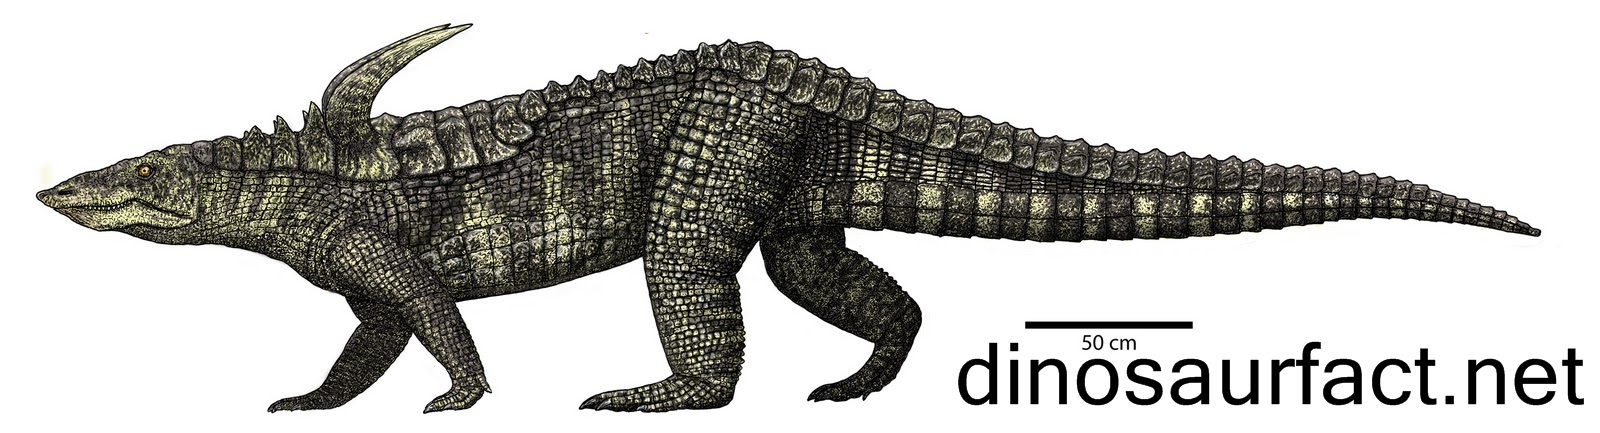 Desmatosuchus Dinosaur